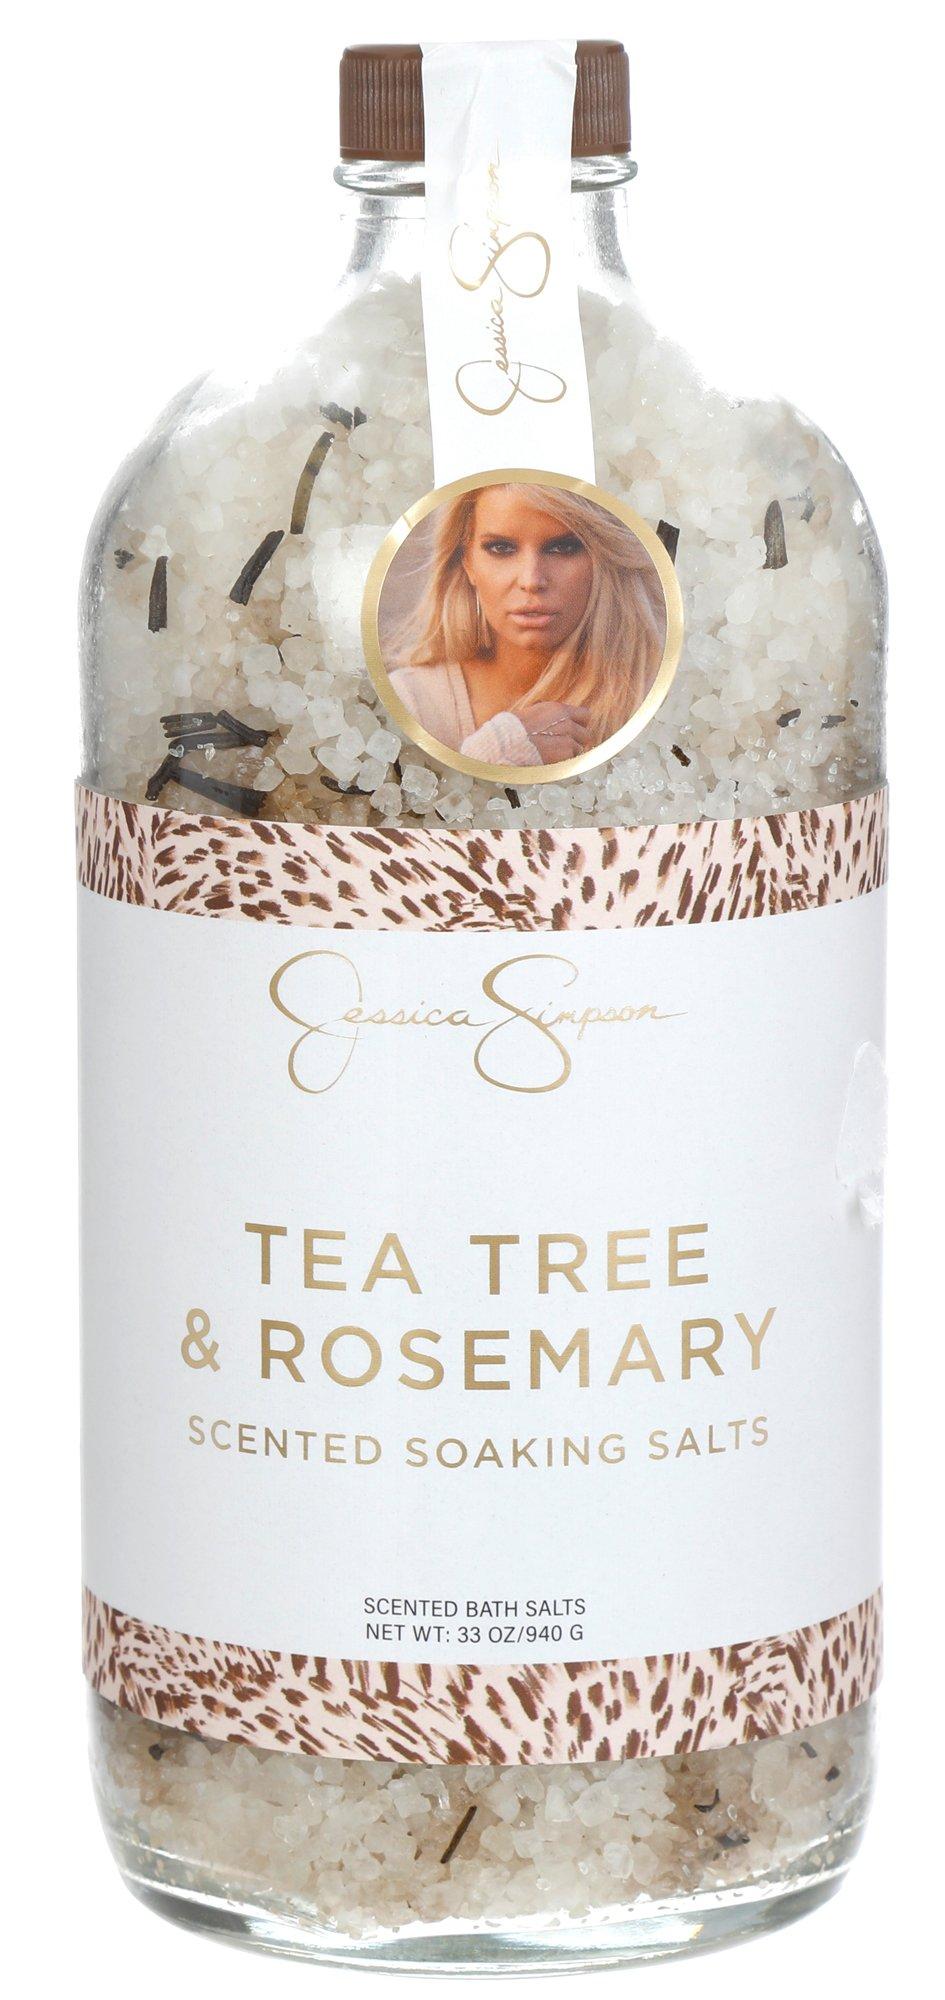 Tea Tree and Rosemary Scented Soaking Salts